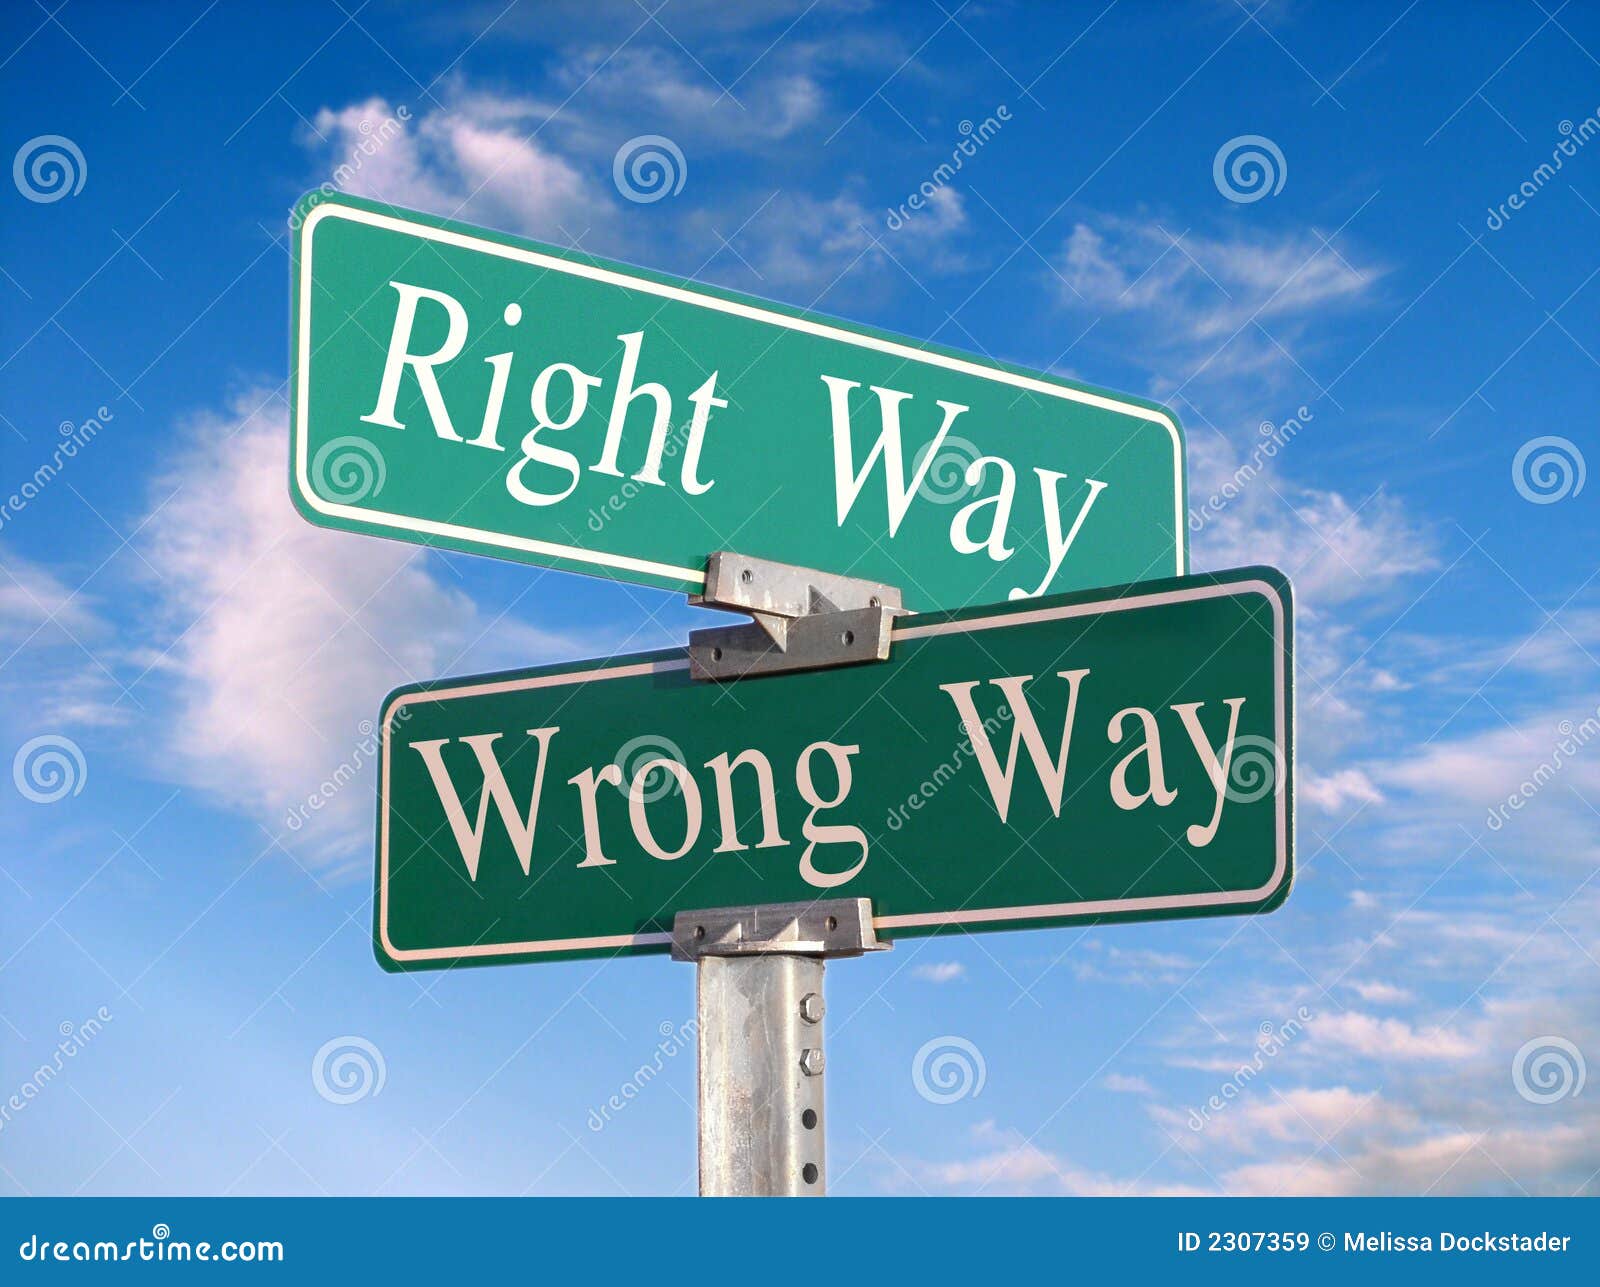 the right way or wrong way